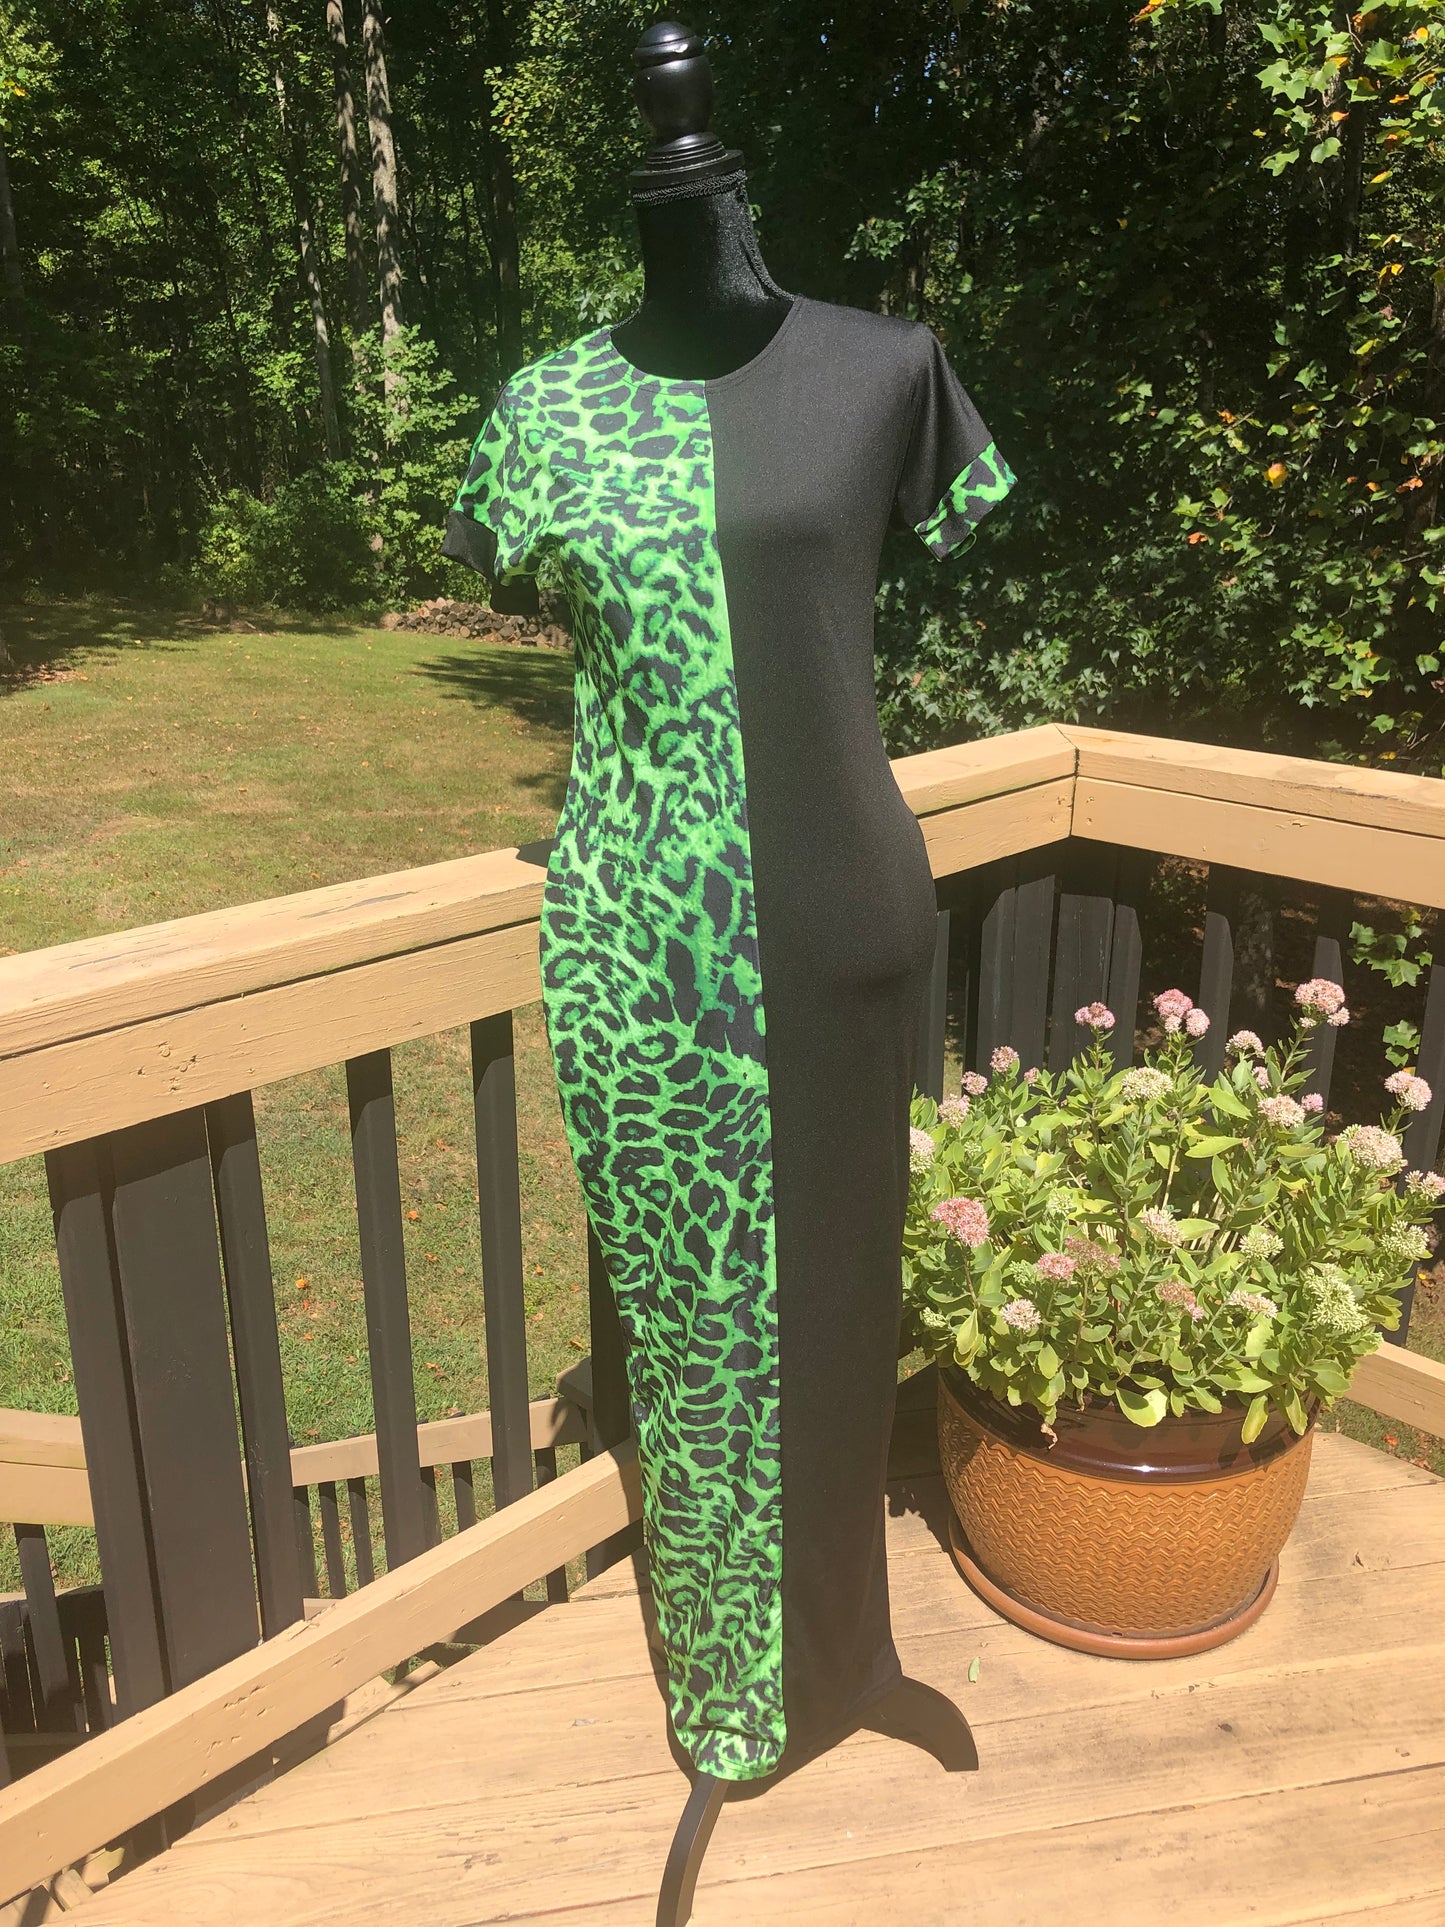 Short Sleeve Leopard Bodycon Dress